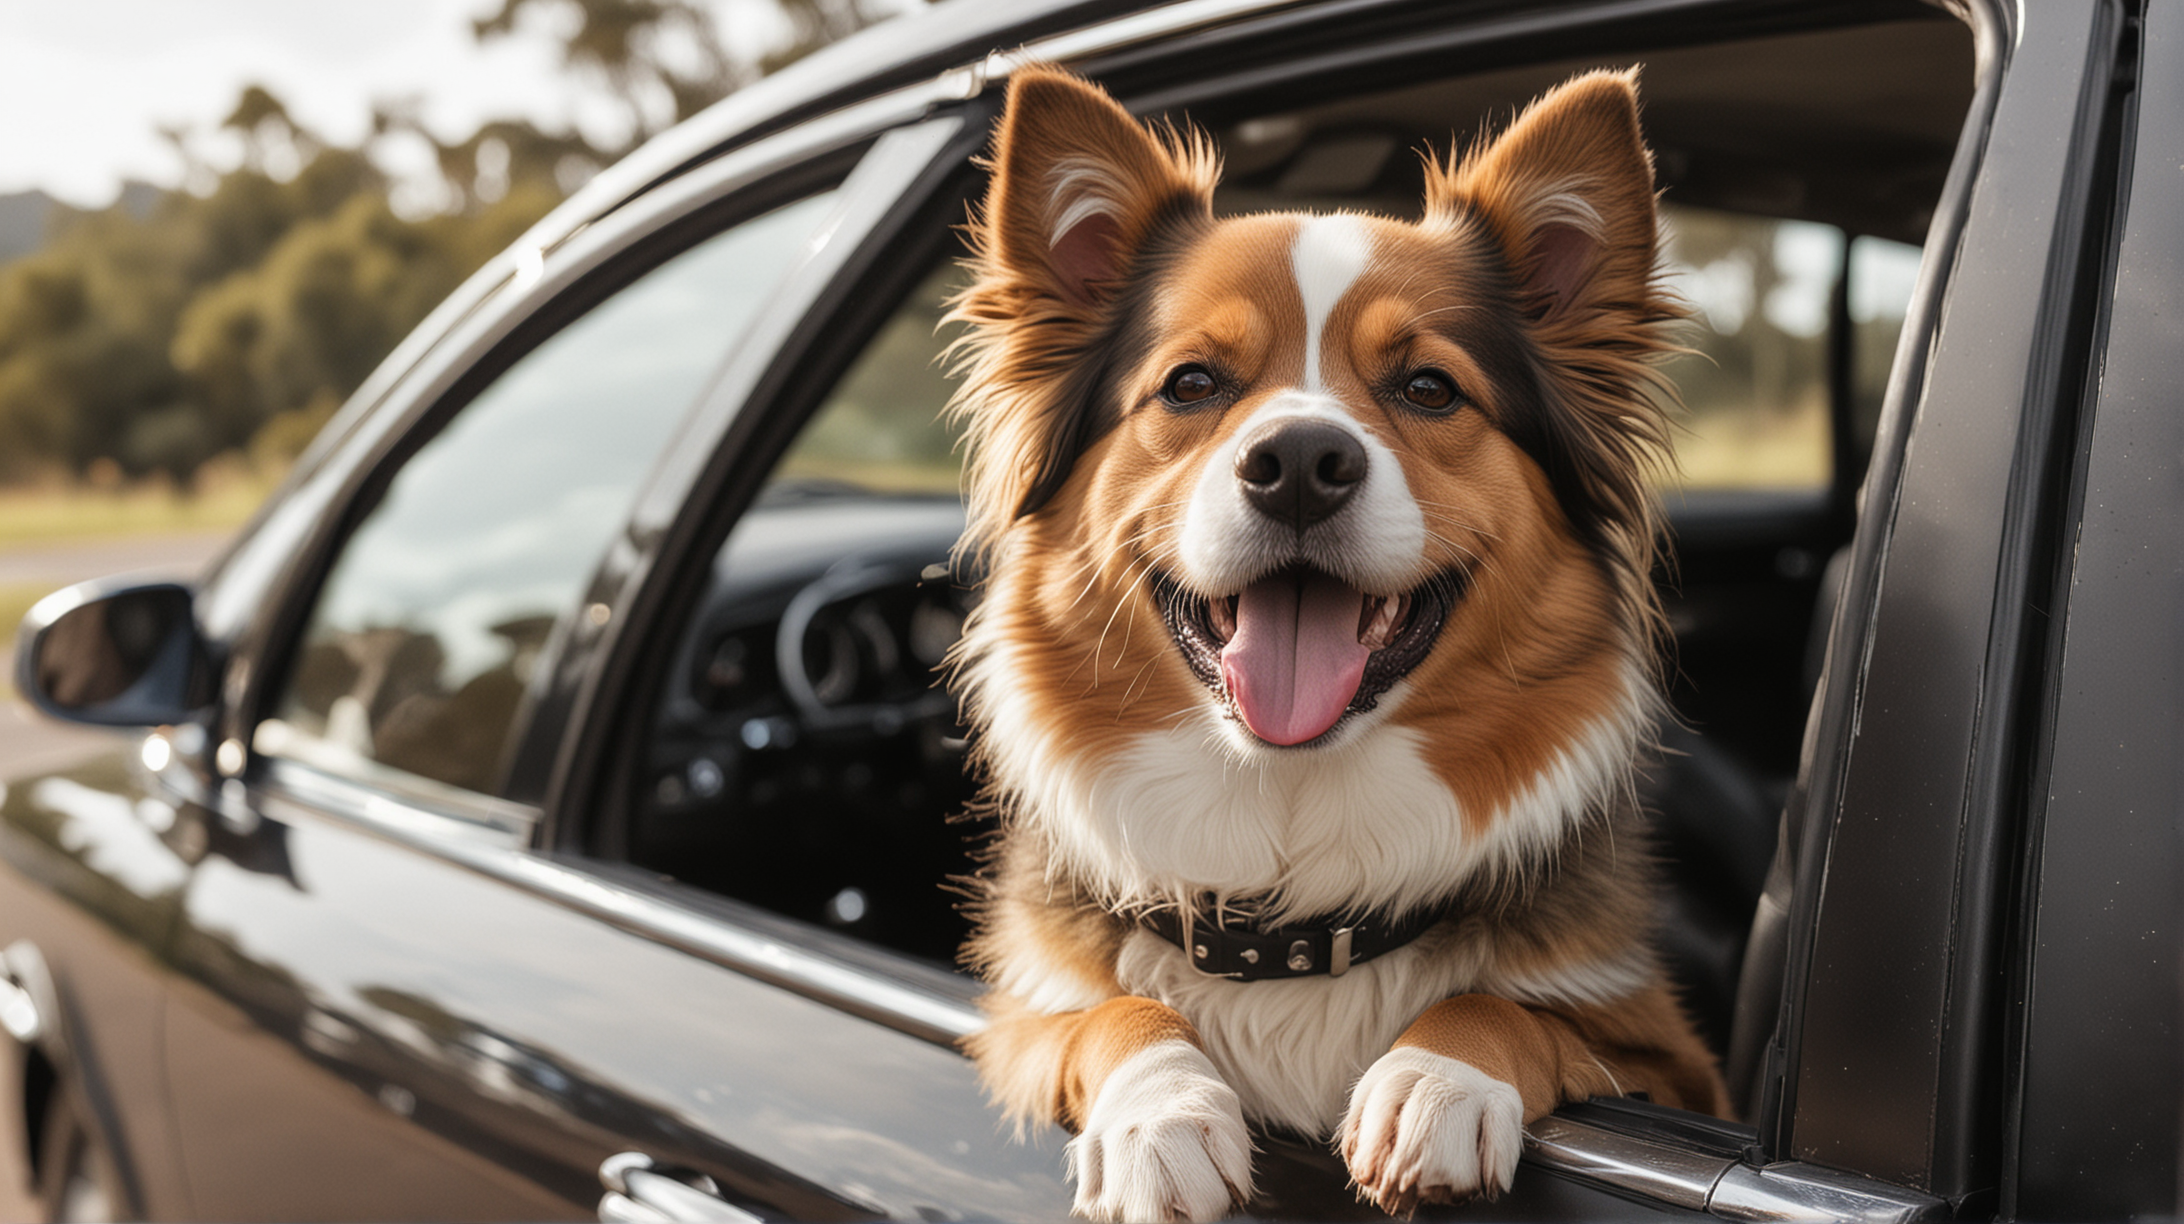 Joyful Canine Companion Riding in Luxury Car in Australia